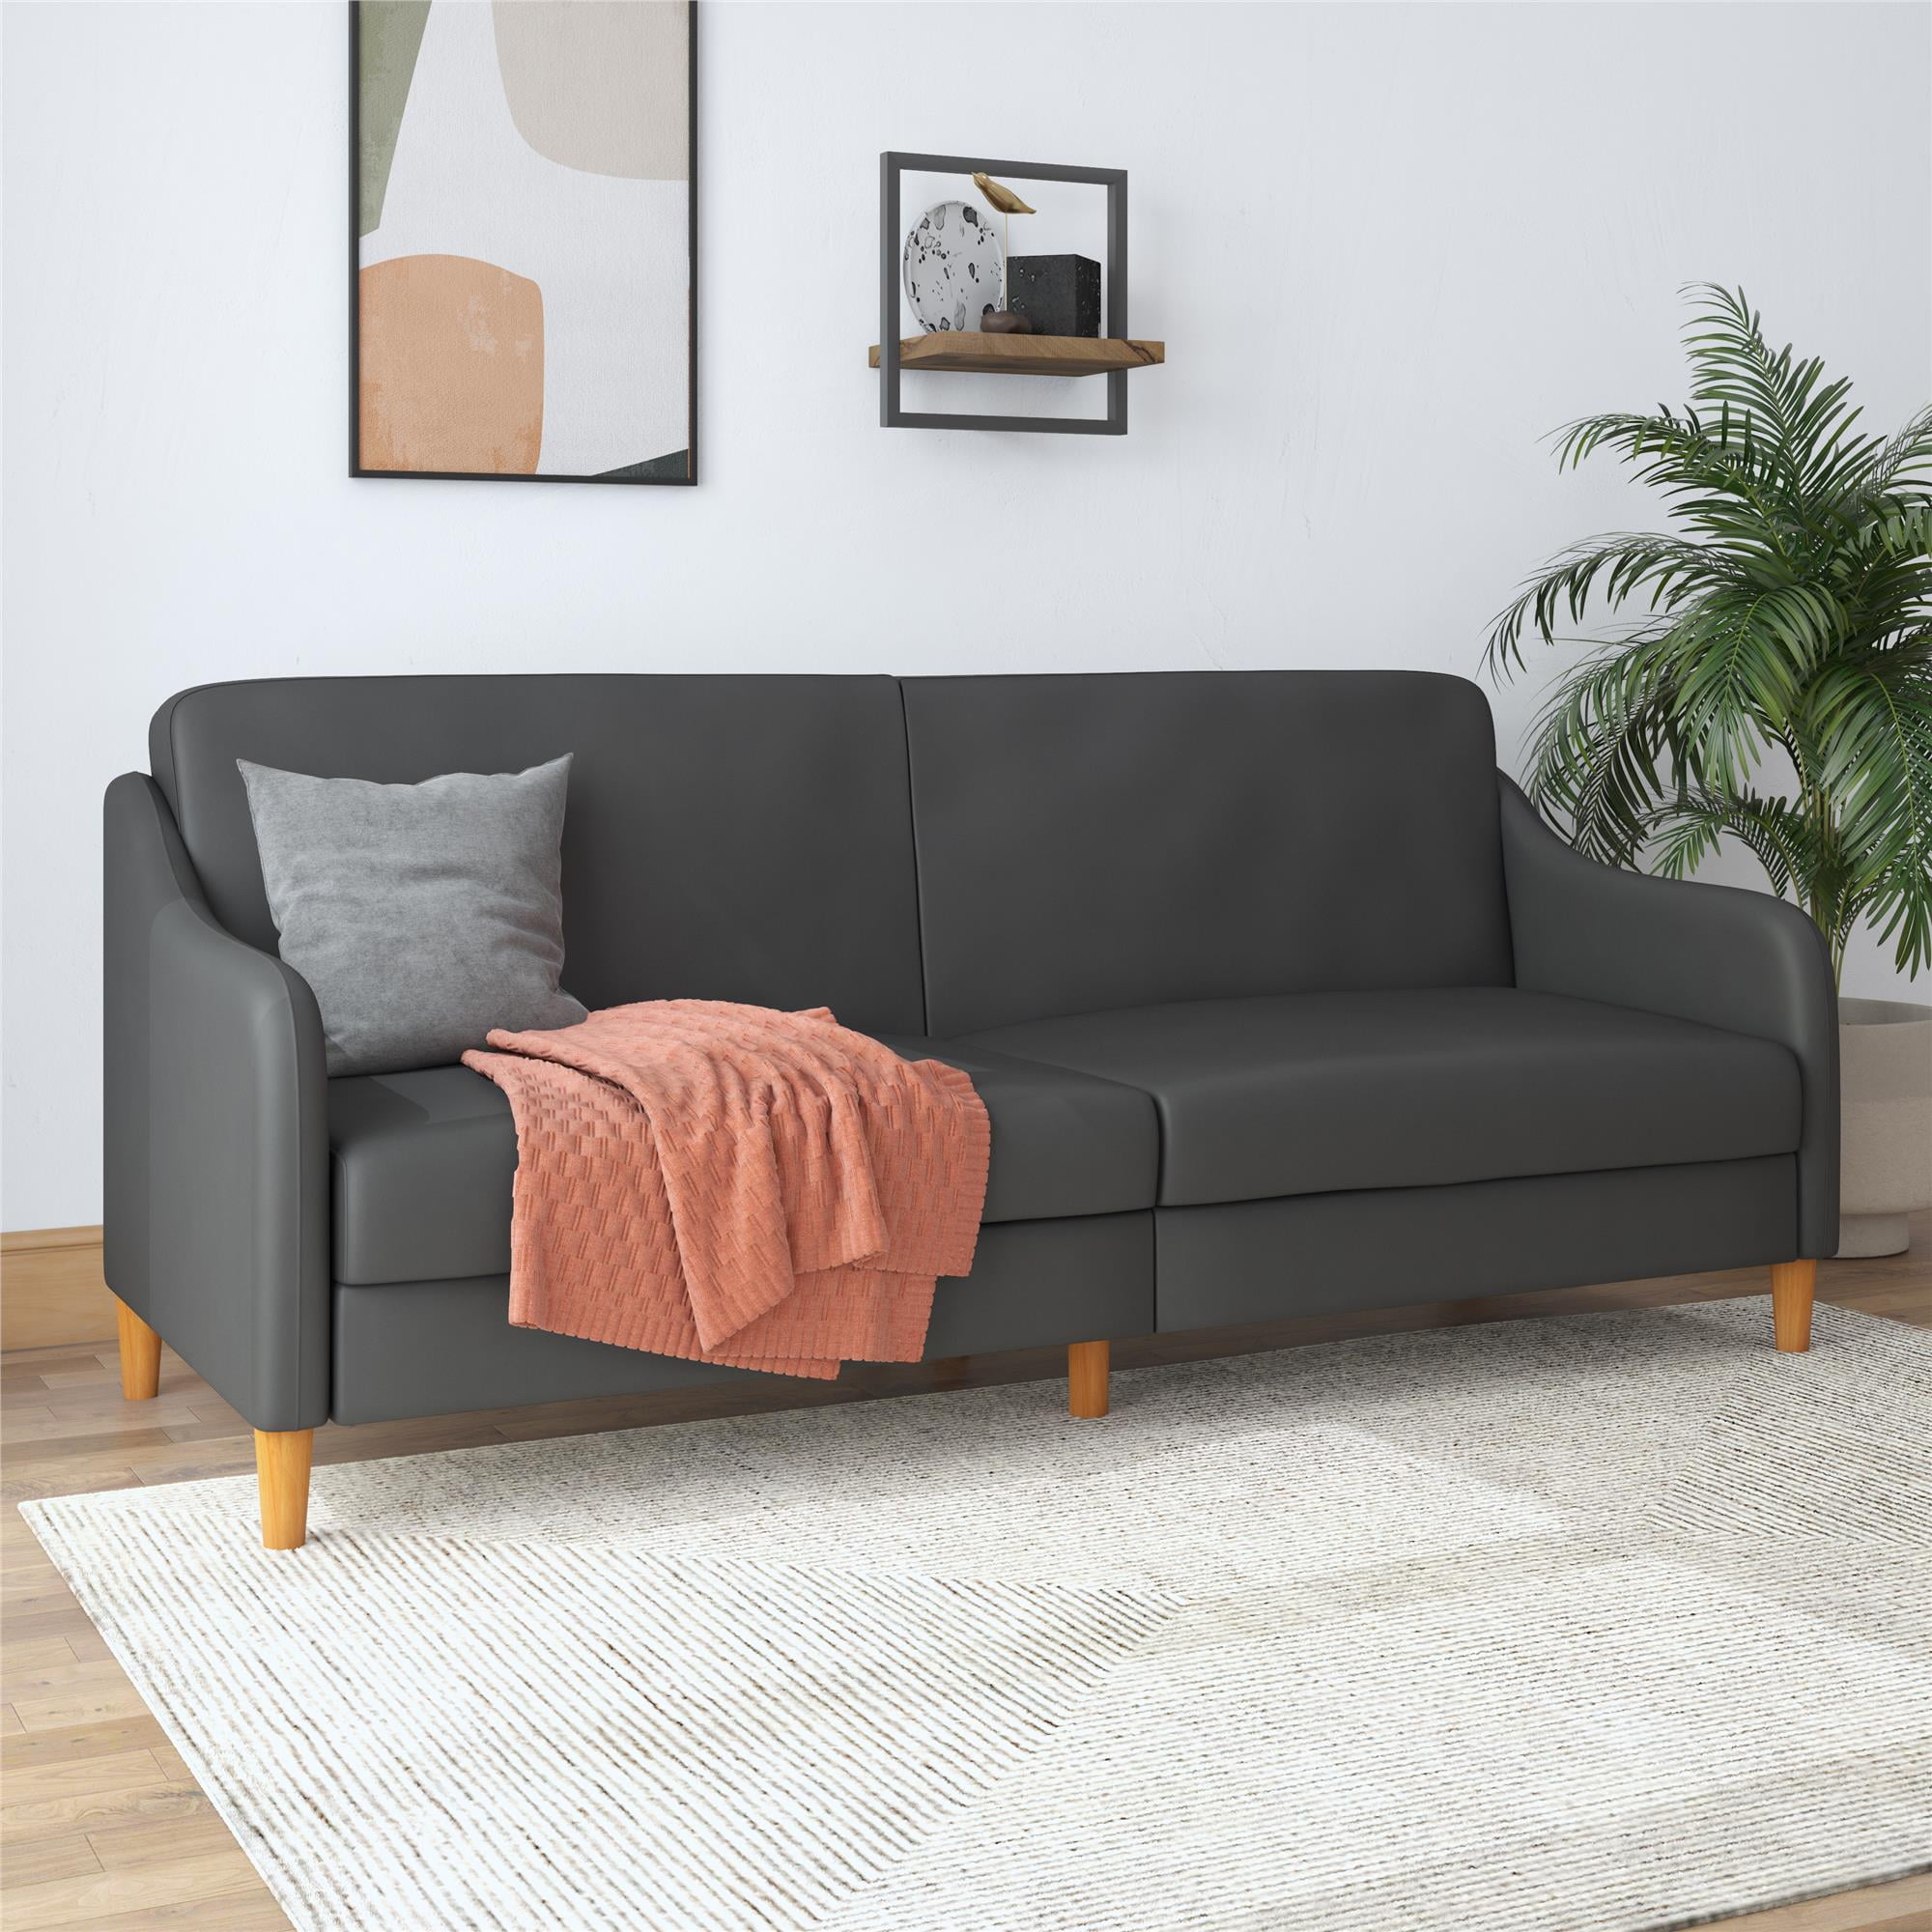 DHP Jasper Coil Convertible Futon Sofa (Gray Faux Leather) $164 + Free Shipping